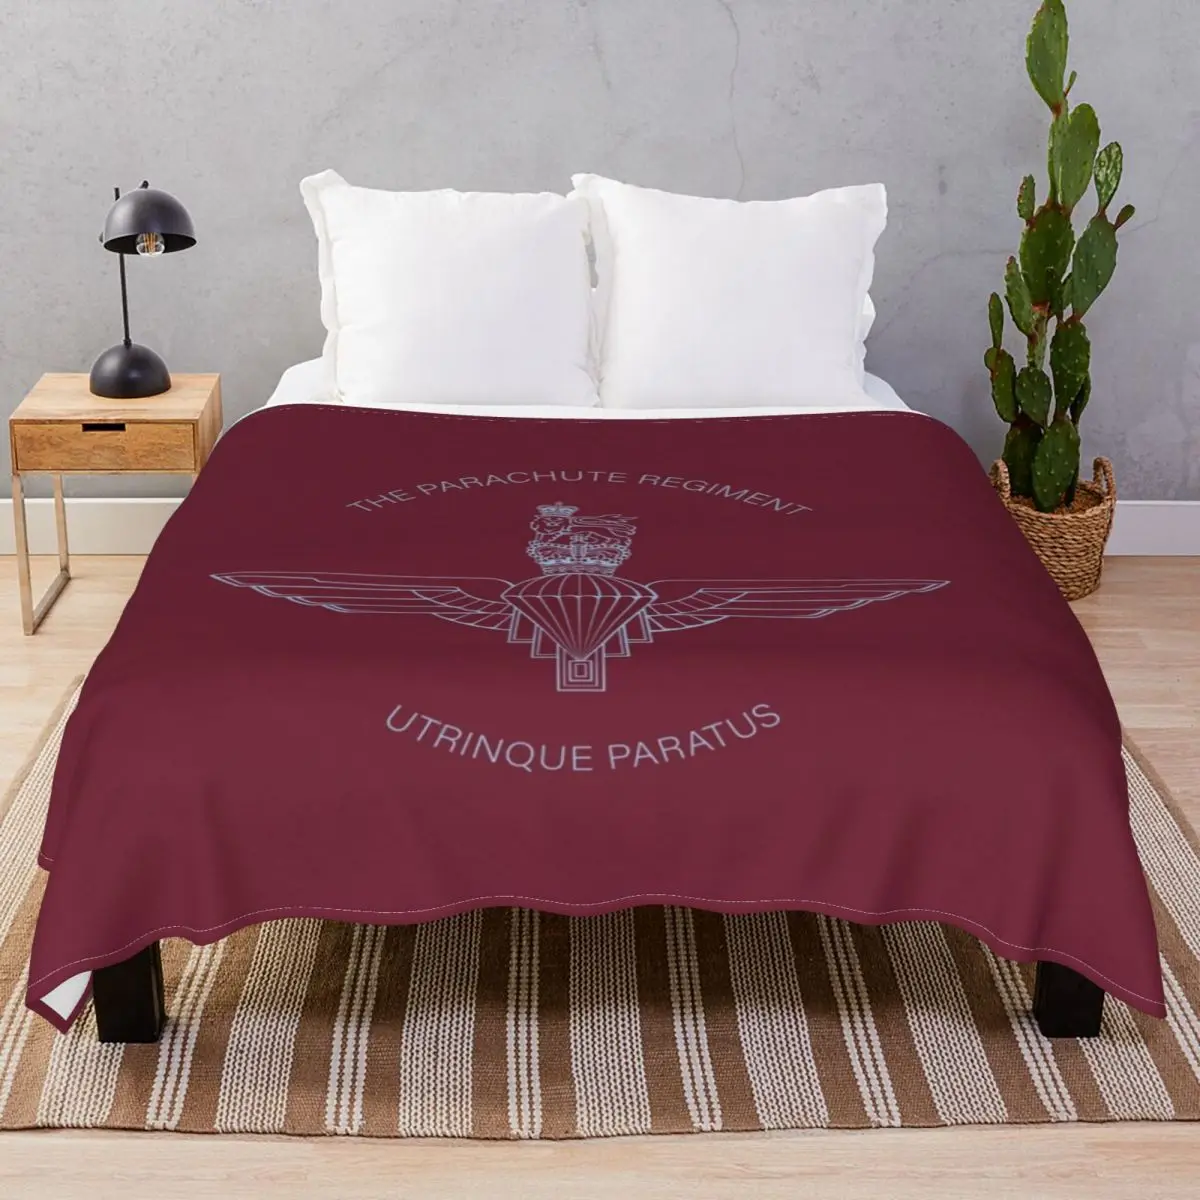 The Parachute Regiment Blanket Velvet Printed Multifunction Unisex Throw Blankets for Bedding Home Couch Travel Cinema